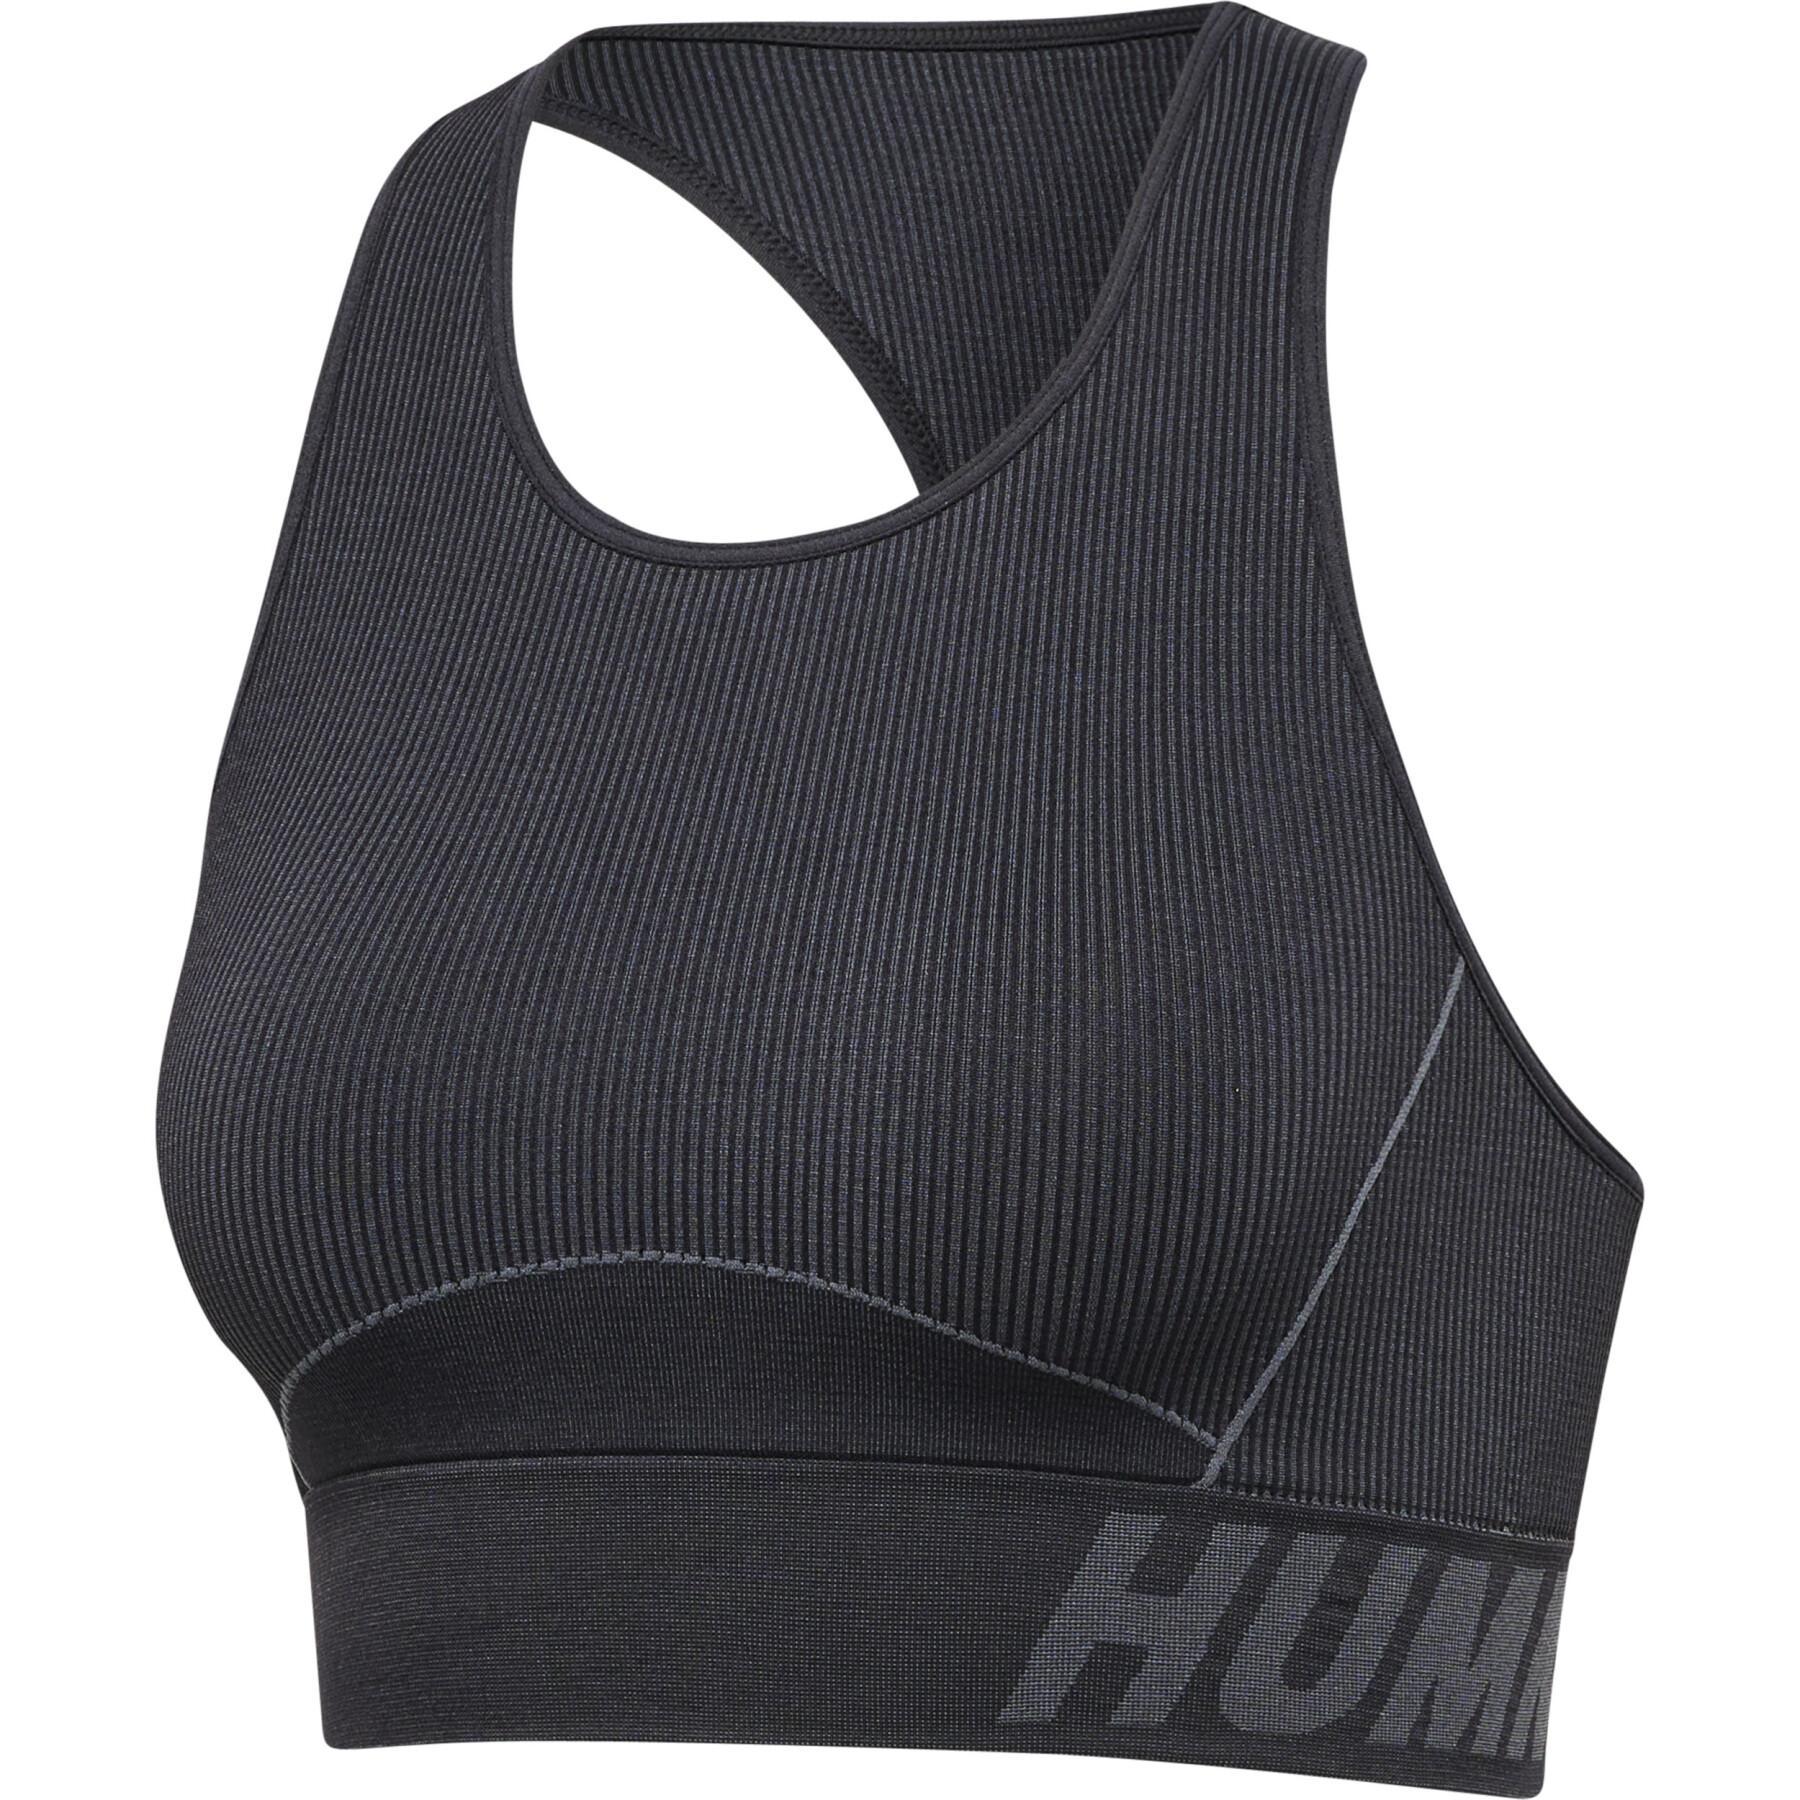 Seamless bra for women Hummel Tif Sports